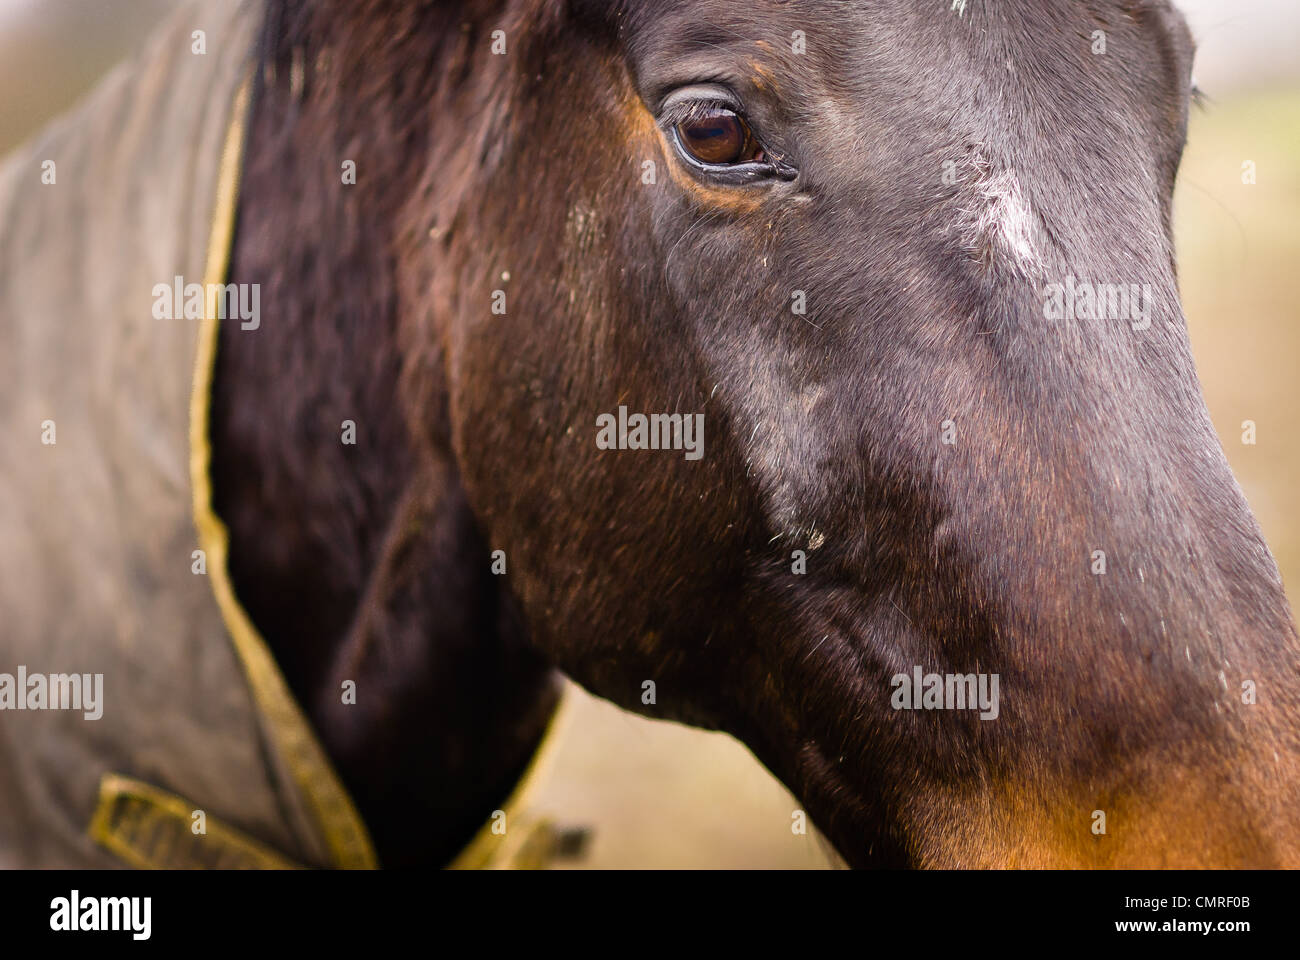 A horse Stock Photo